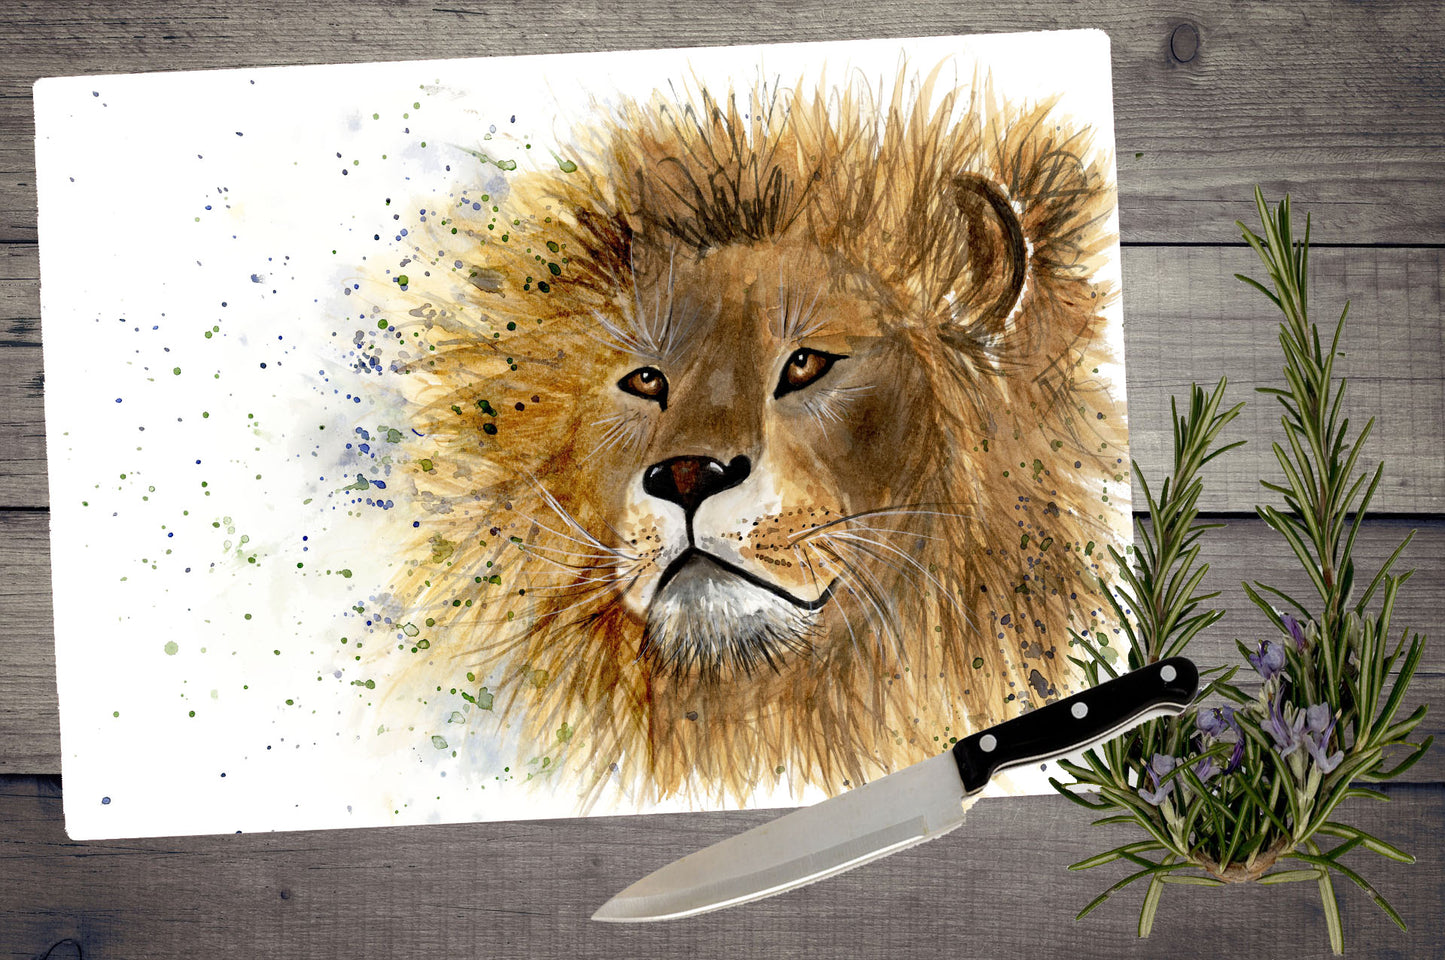 Lion chopping board / Worktop saver